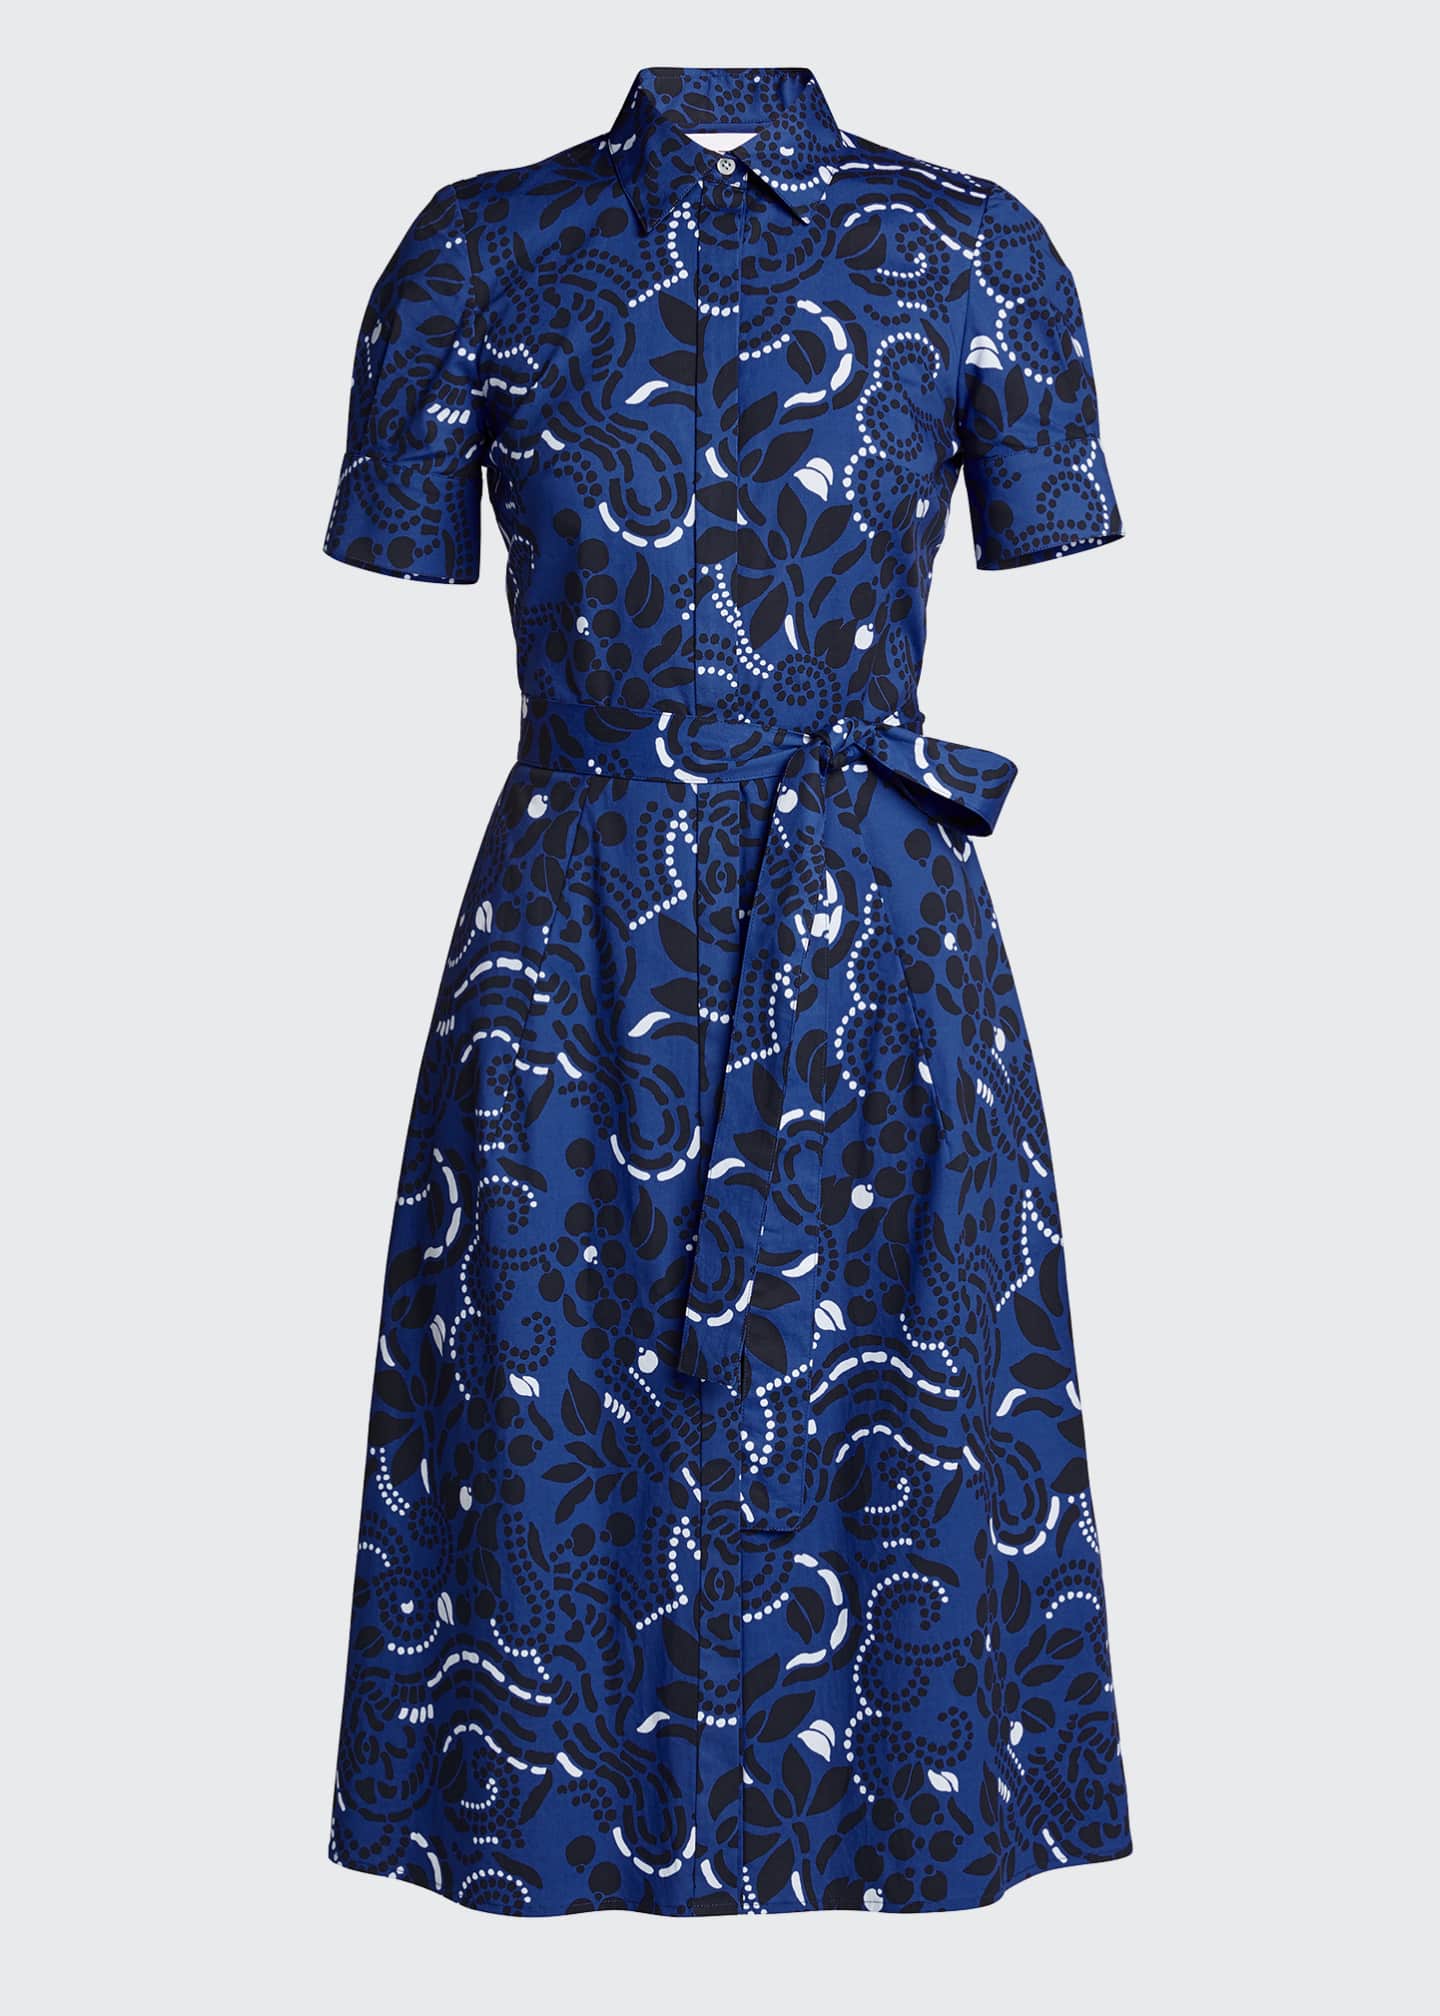 Carolina Herrera Floral Print Belted Shirtdress - Bergdorf Goodman